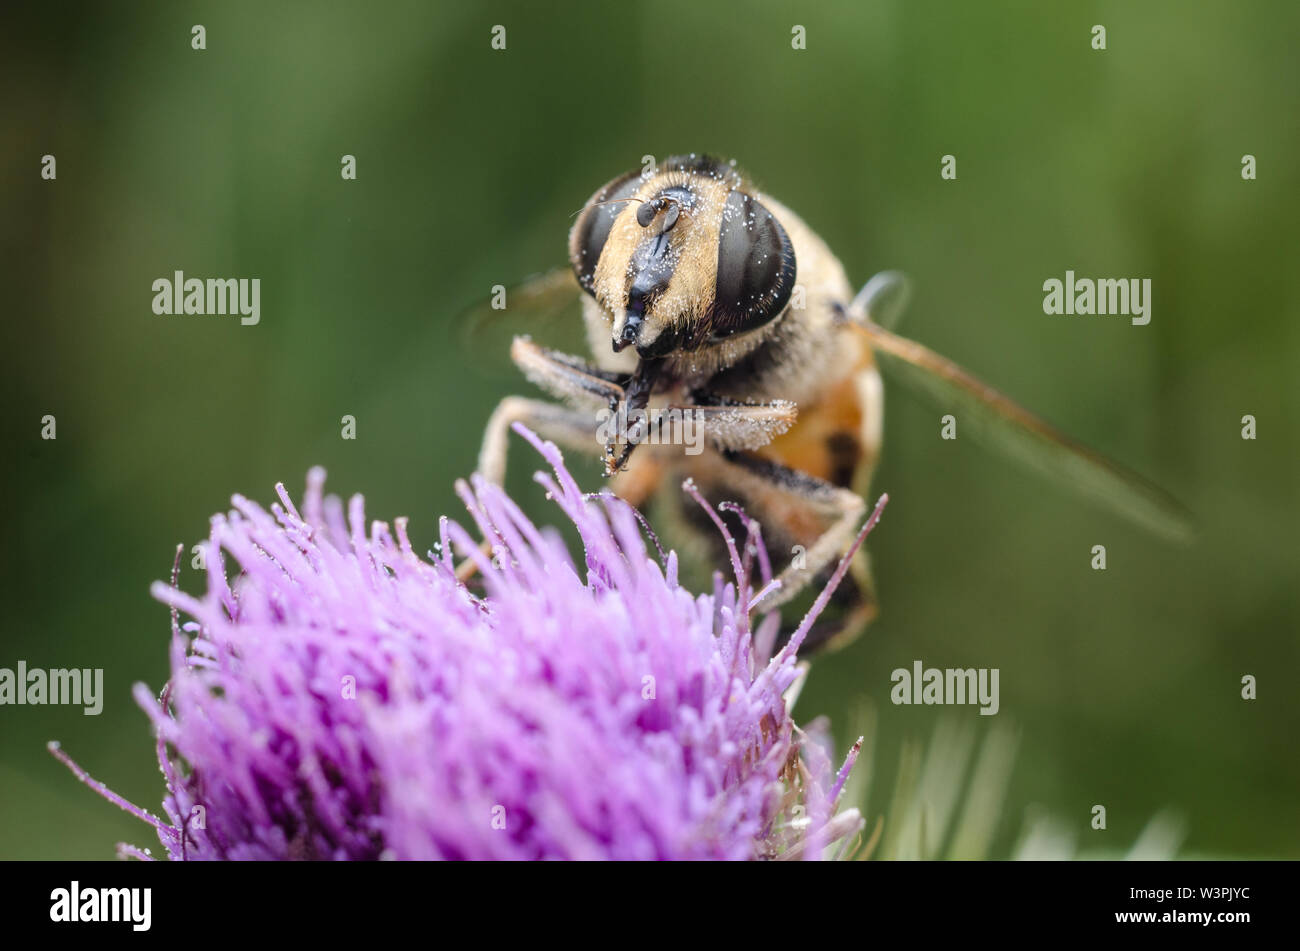 Eristalis tenax, Hoverfly on a purple flower, macro photograph Stock Photo